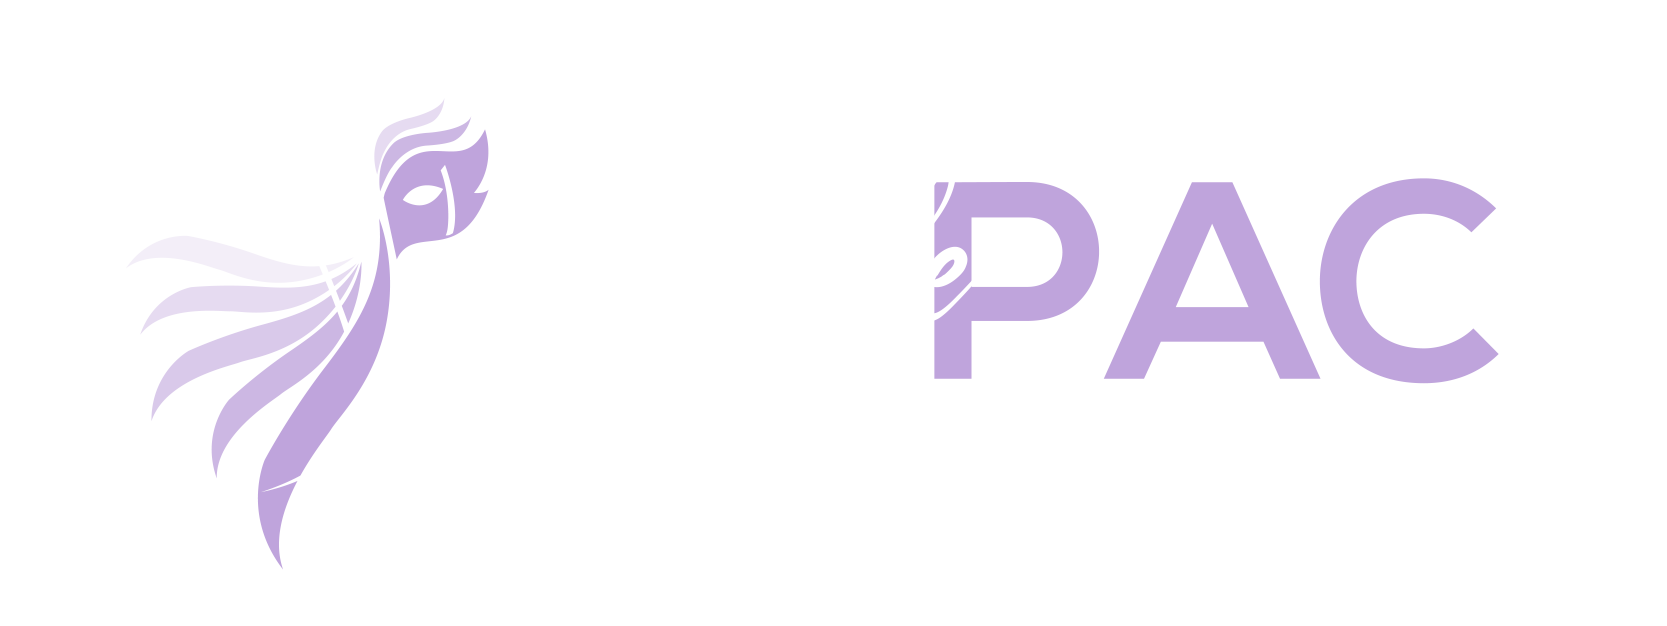 Bellevue Performing Arts Center Logo